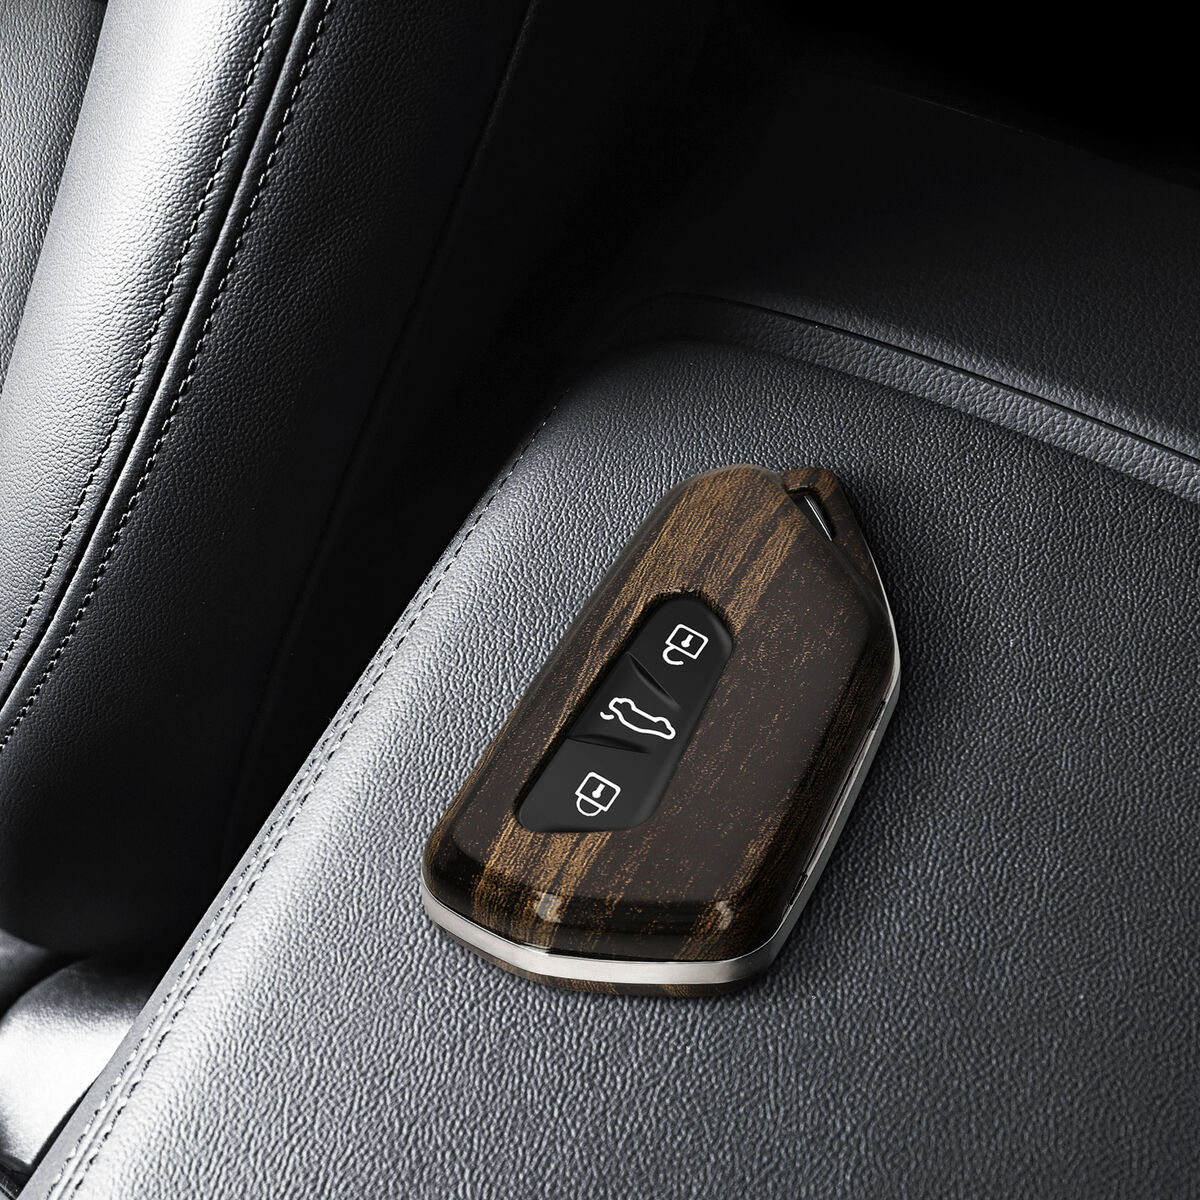 Hülle für VW Golf 8 Autoschlüssel Kunstleder Case Schlüssel Car